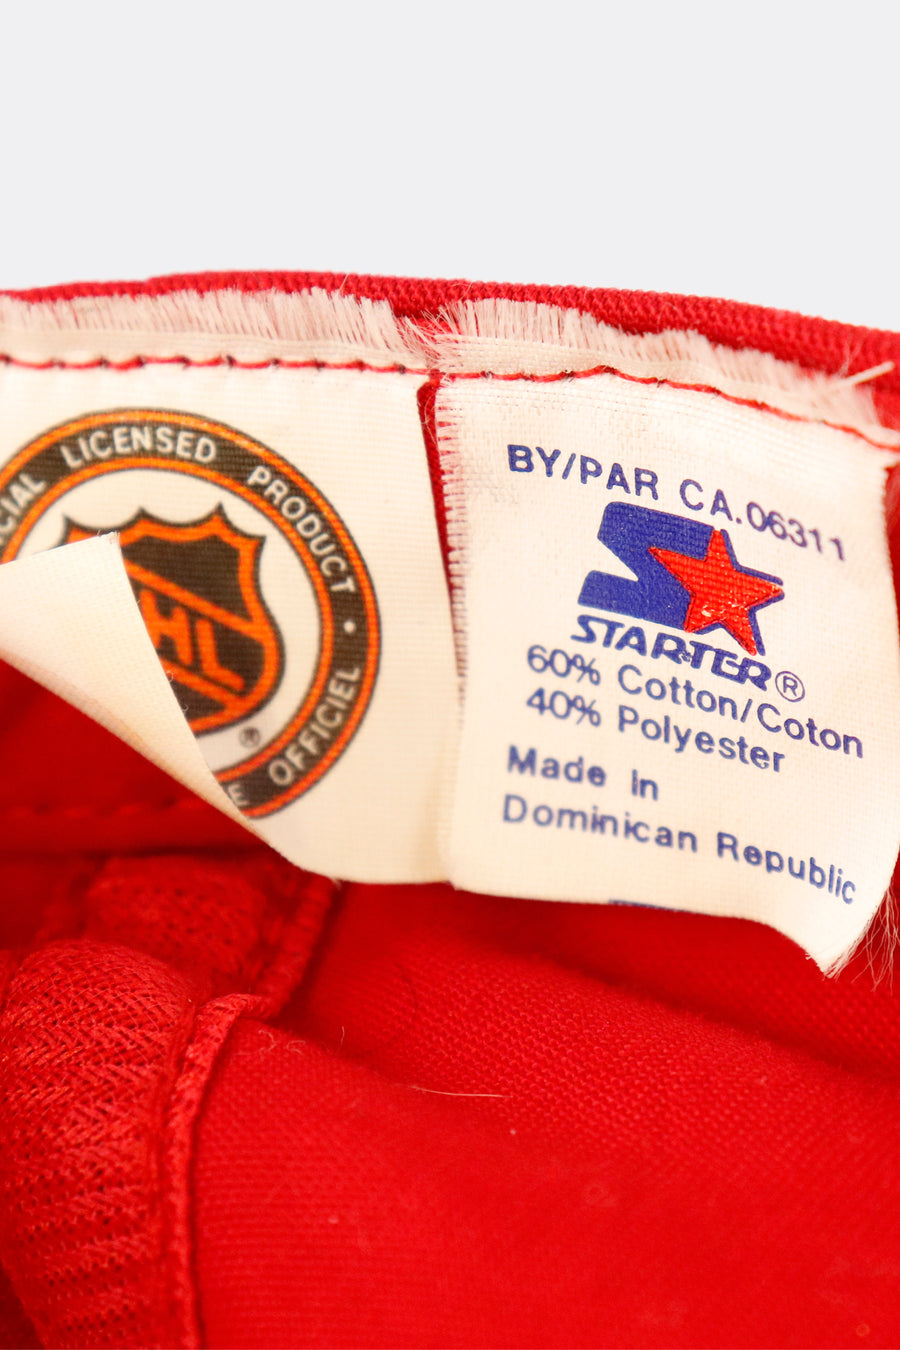 Vintage NHL Montreal Canadiens Starter Embroidered Snapback Hat